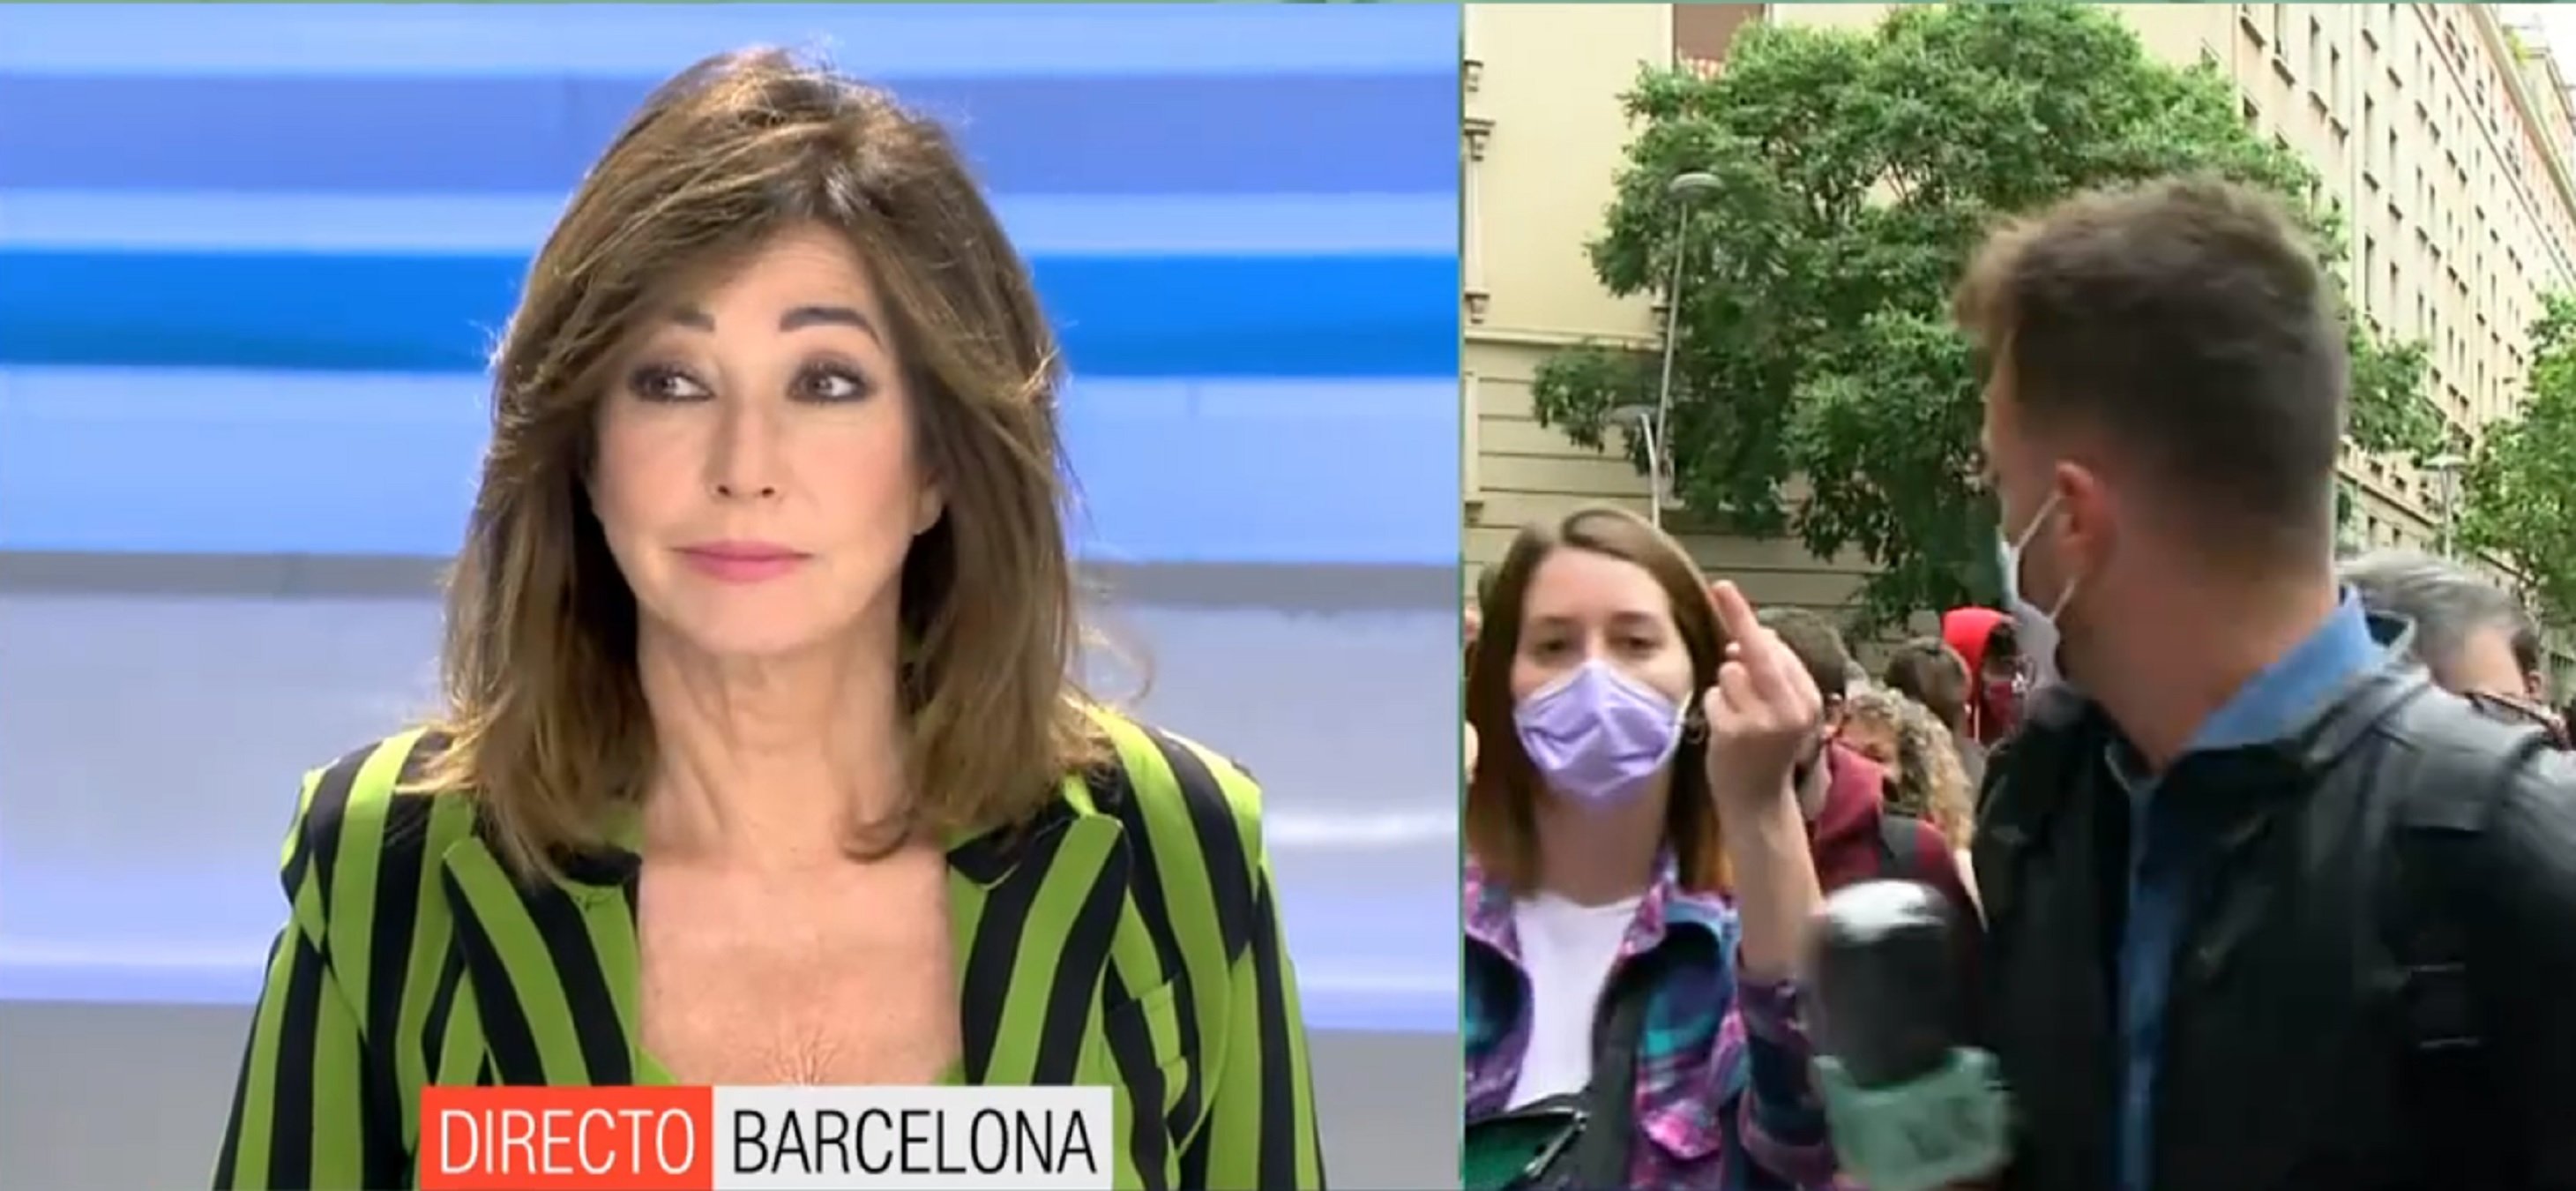 Ana Rosa Quintana, abucheada en Barcelona, insulta a una manifestante: "Tonta"